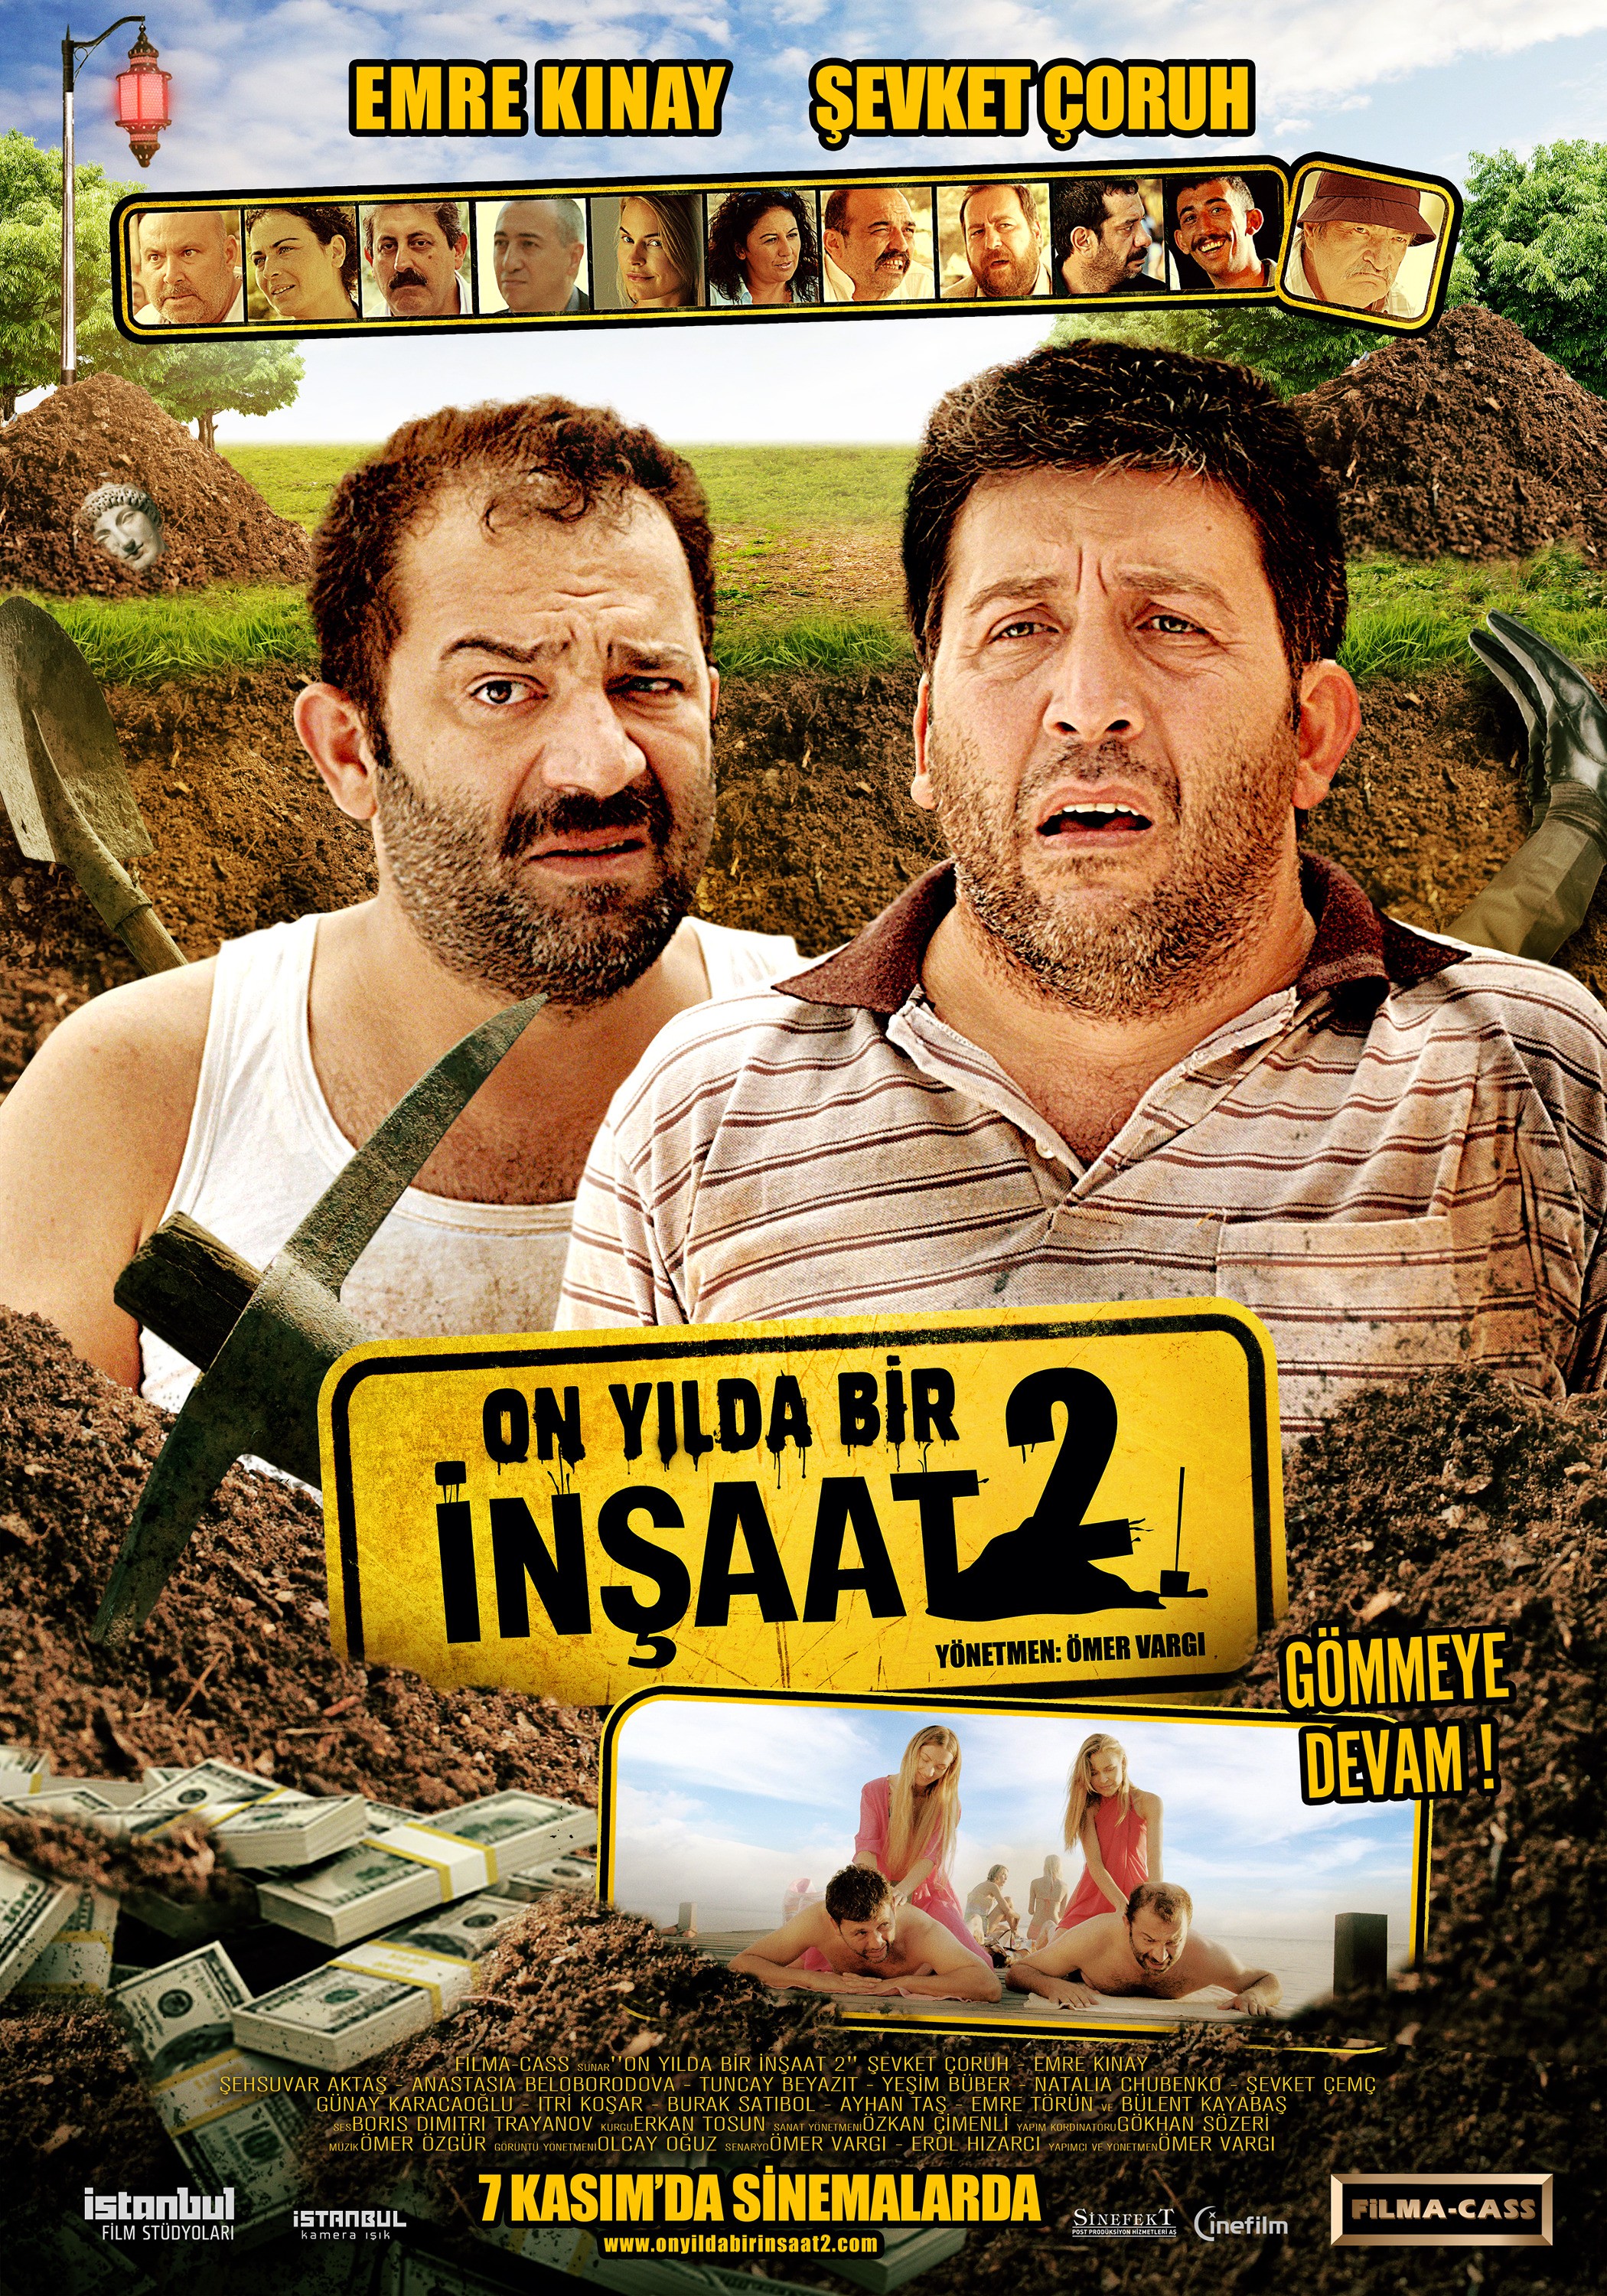 Mega Sized Movie Poster Image for On Yilda Bir: Insaat 2 